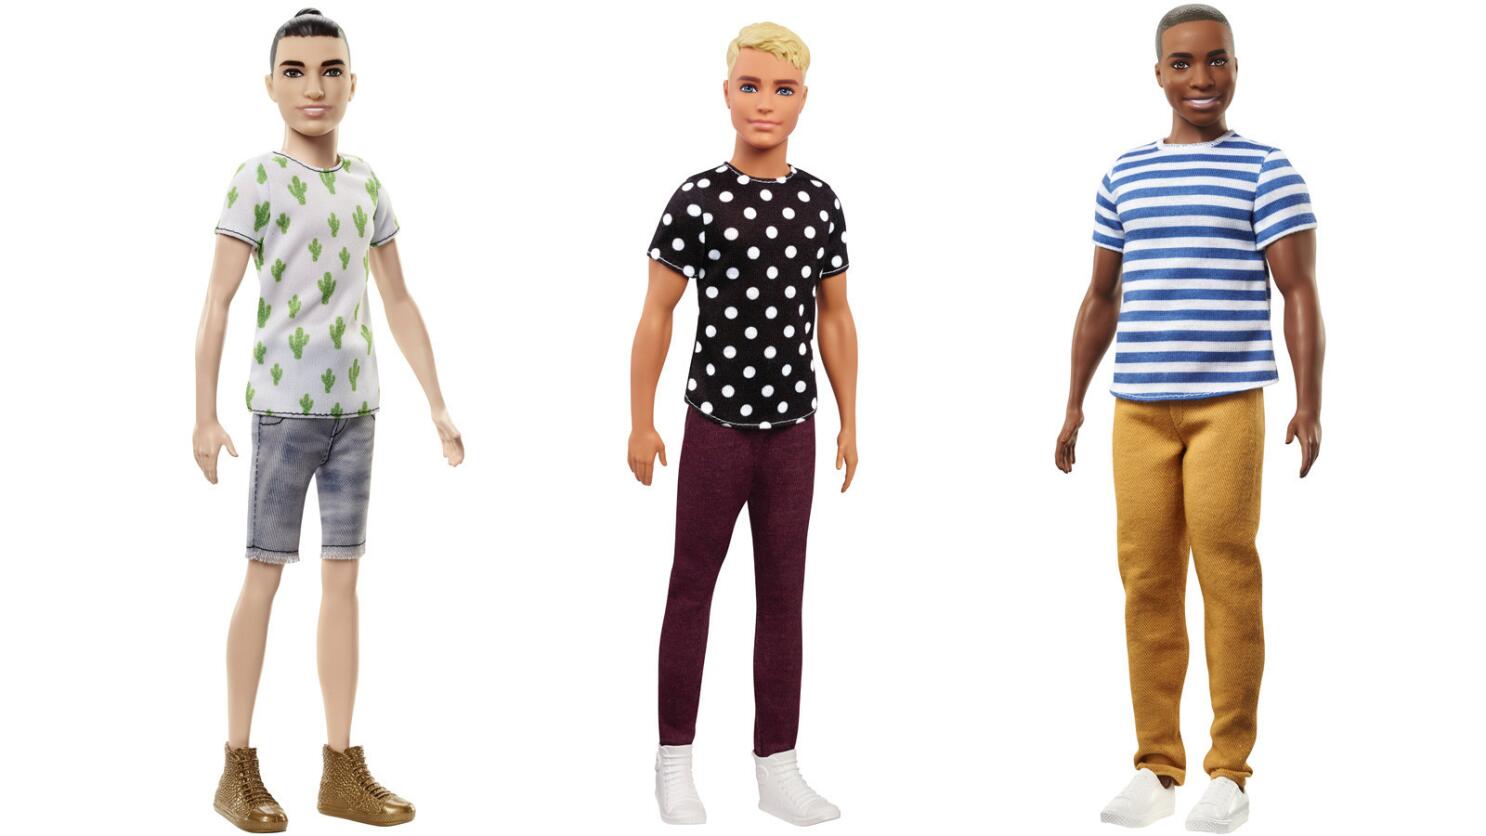 Mattel unveils a diverse new line of Ken dolls, man buns included